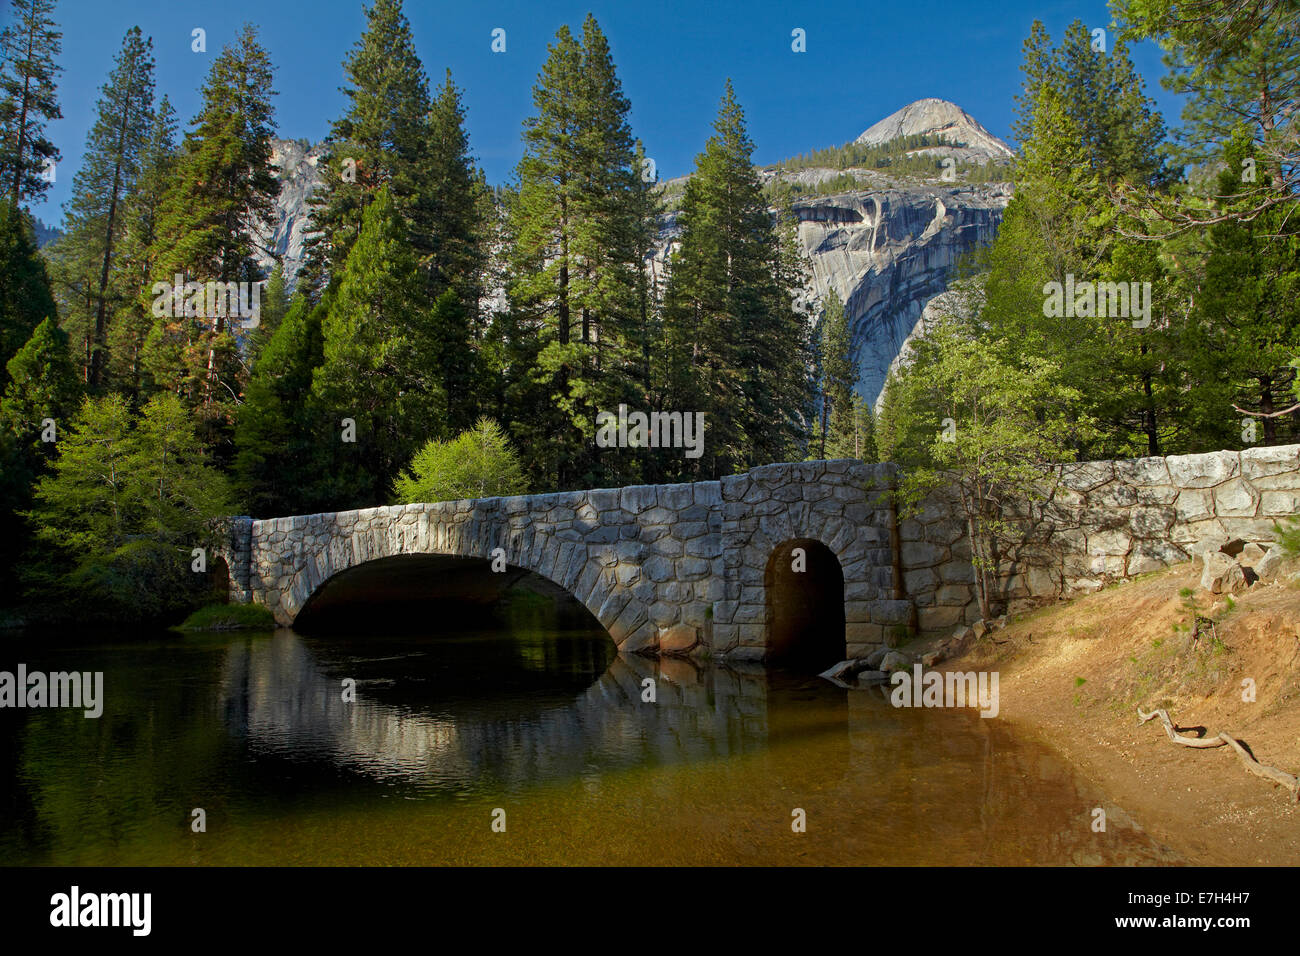 Stoneman ponte sul fiume Merced, Yosemite Valley, Yosemite National Park, California, Stati Uniti d'America Foto Stock